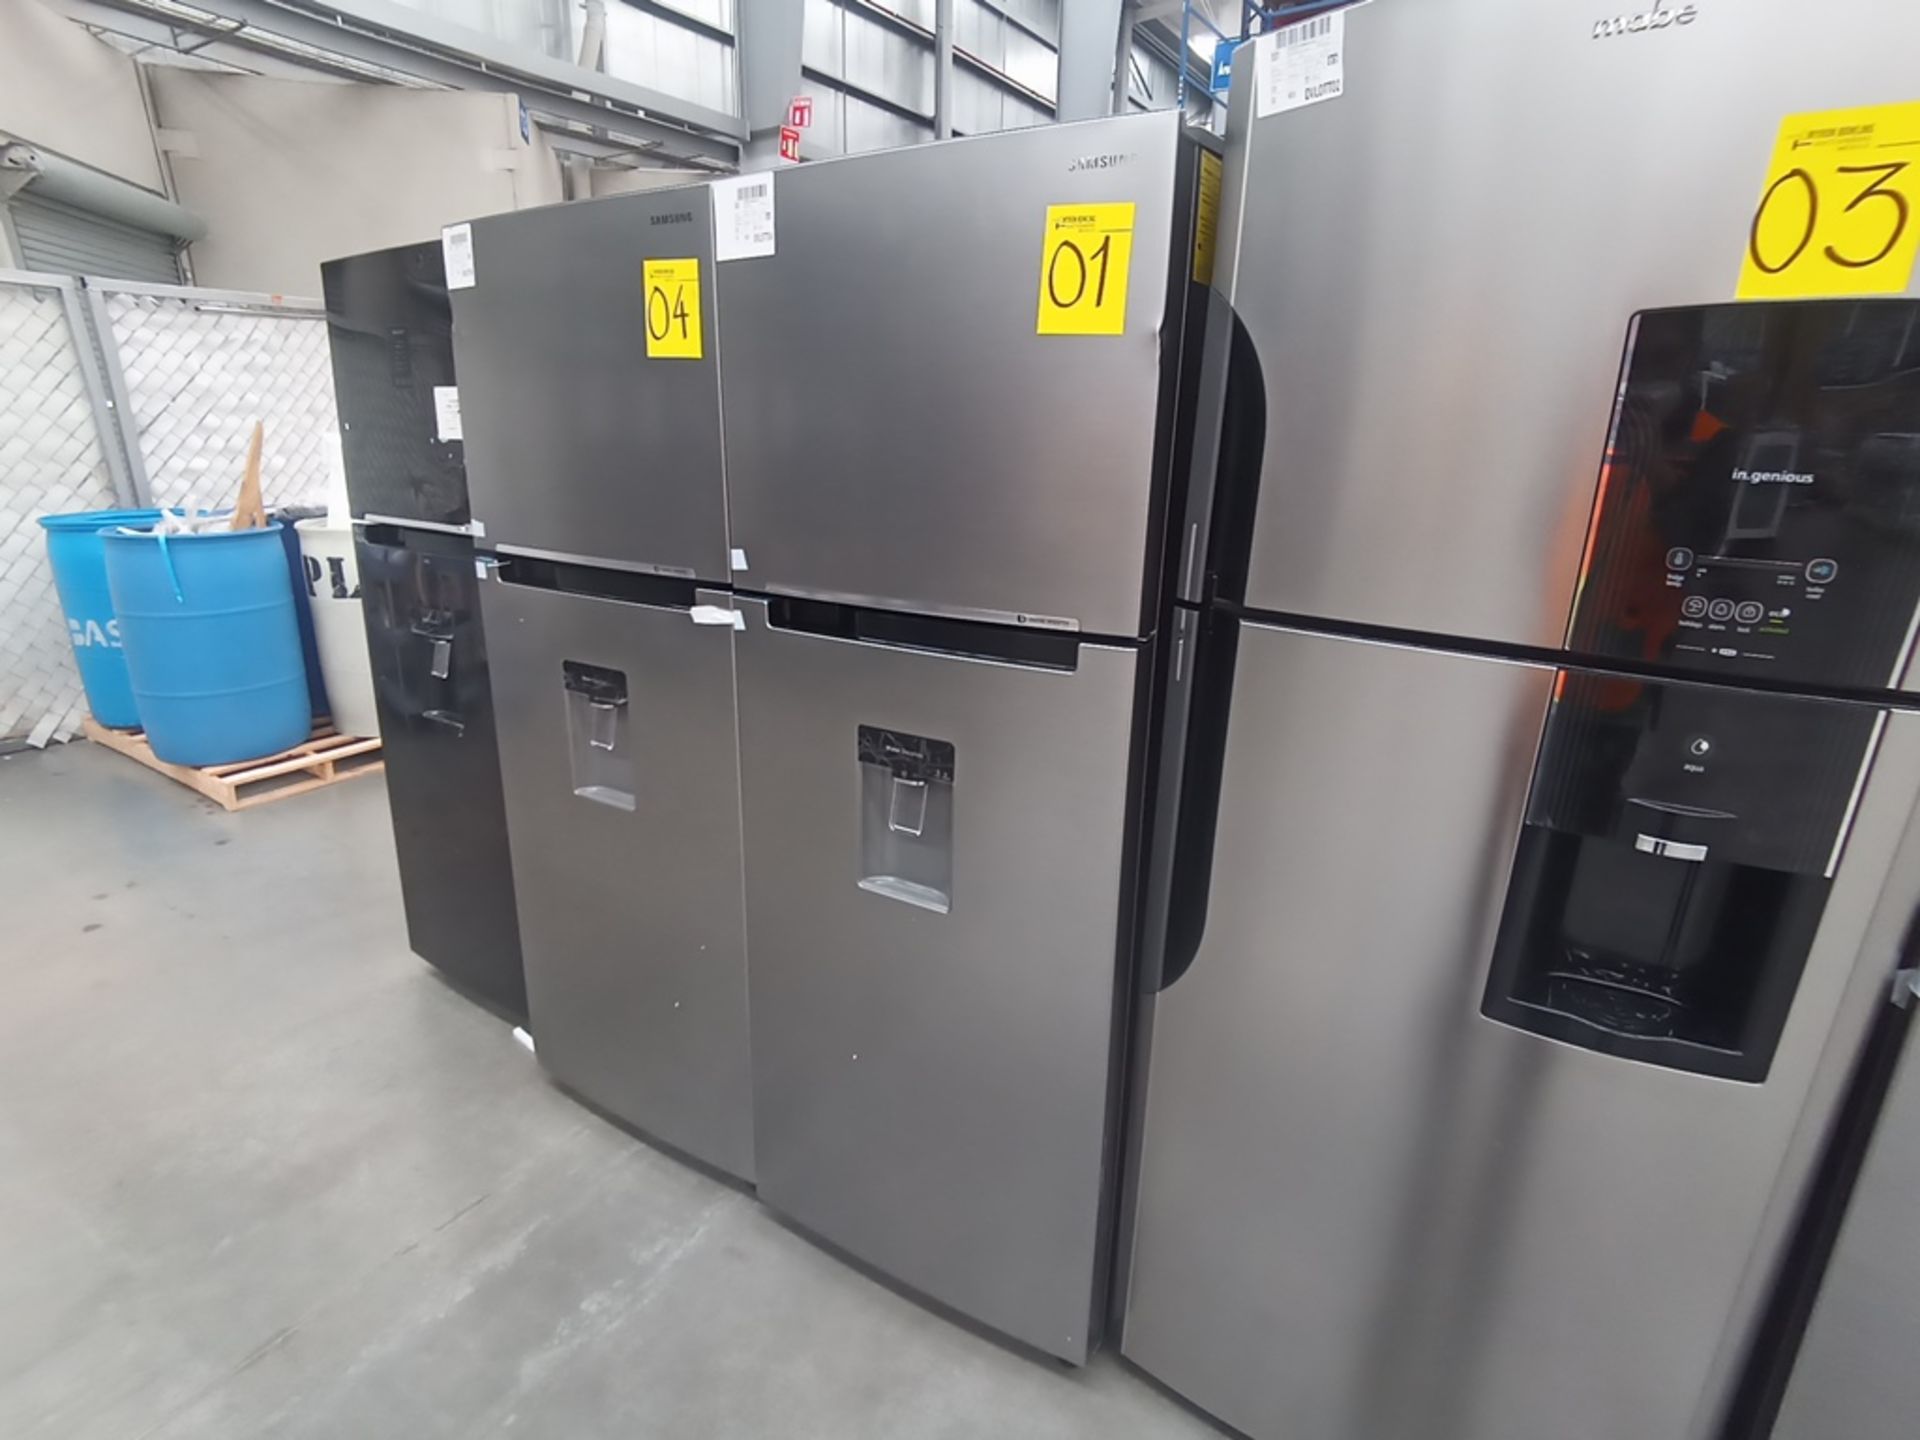 1 Refrigerador Marca Samsung, Modelo RT38AS71IS9, Serie 0BBT4BAT201582F, Color Gris, Golpeado, Favo